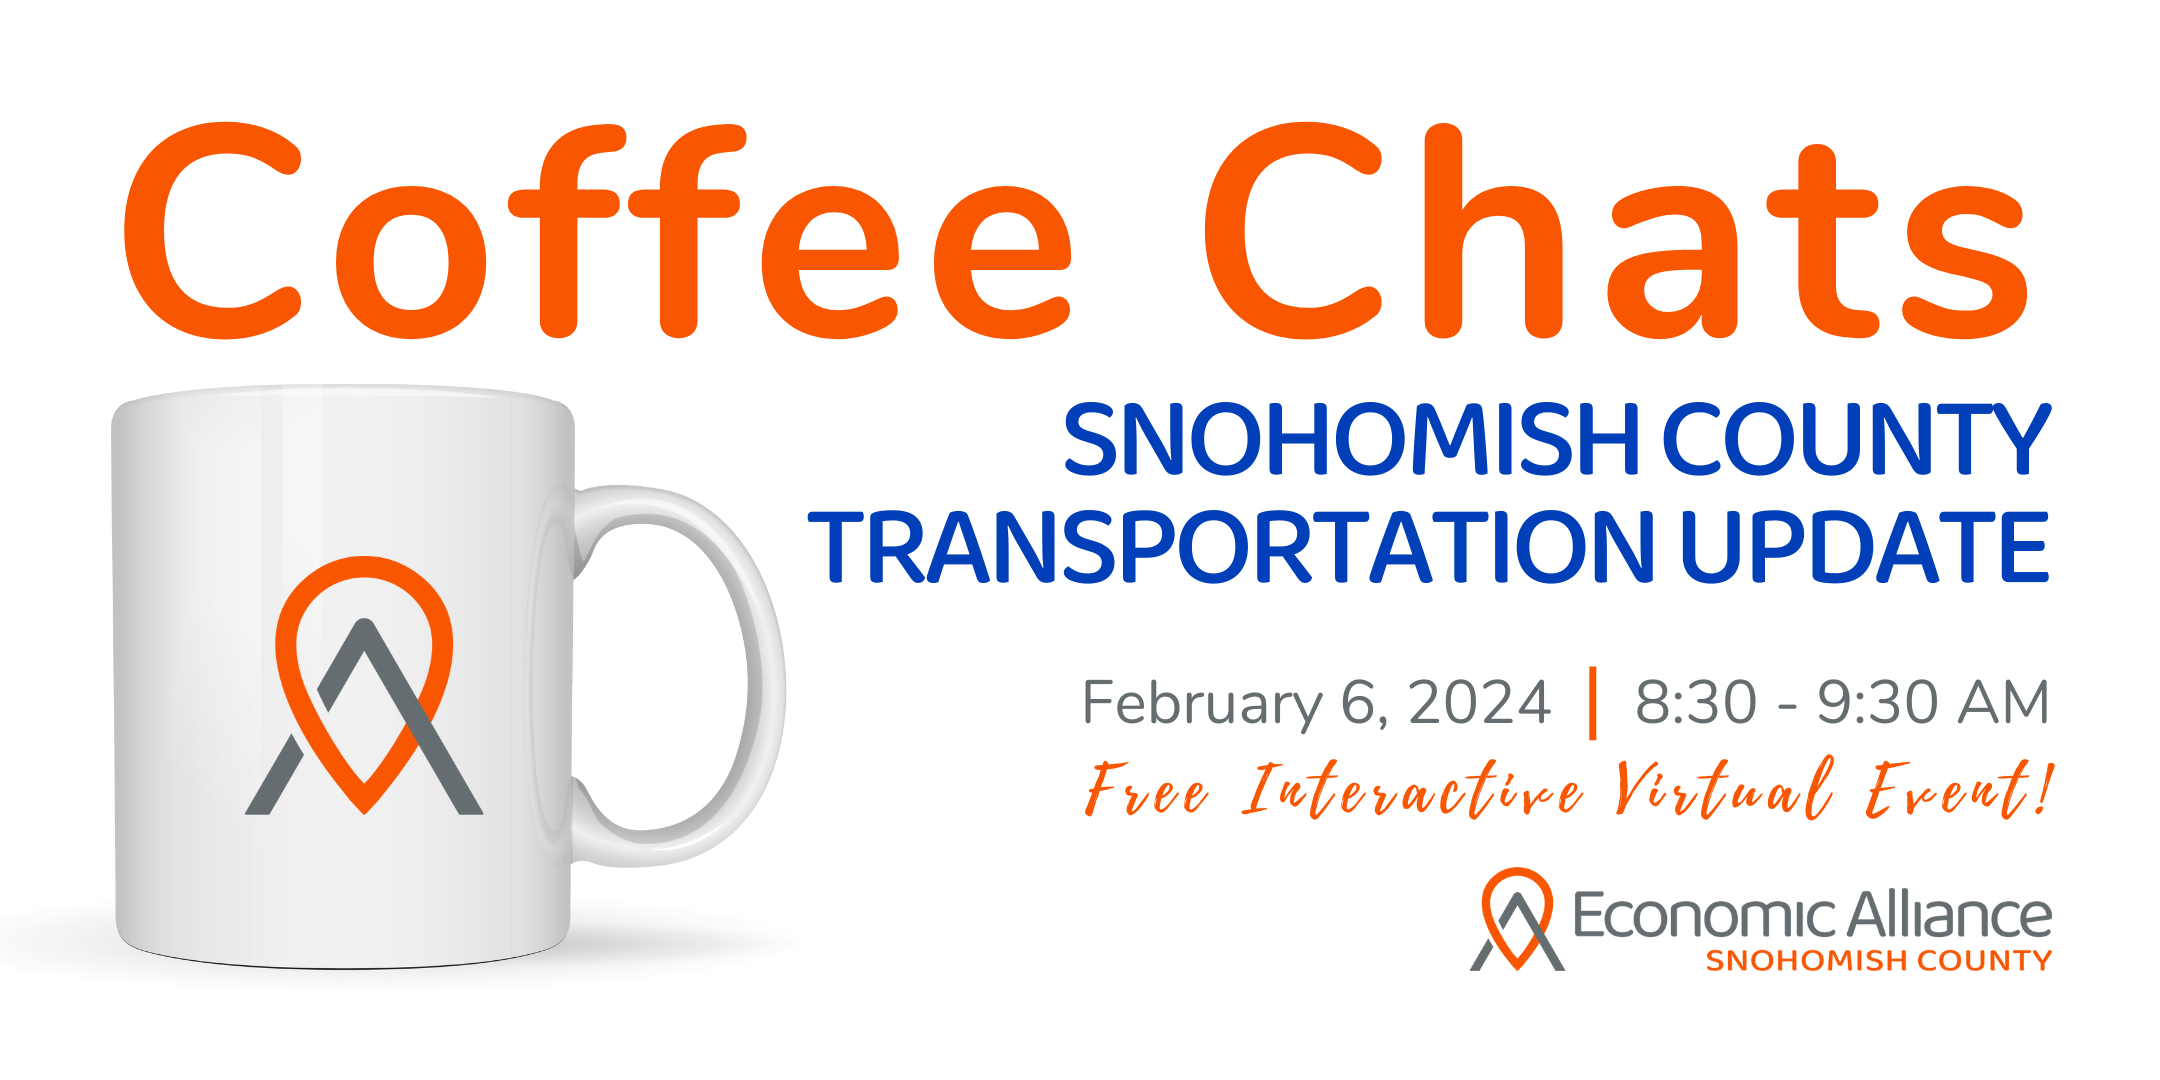 Economic Alliance Snohomish County Hosts Snohomish County Transportation Update Photo